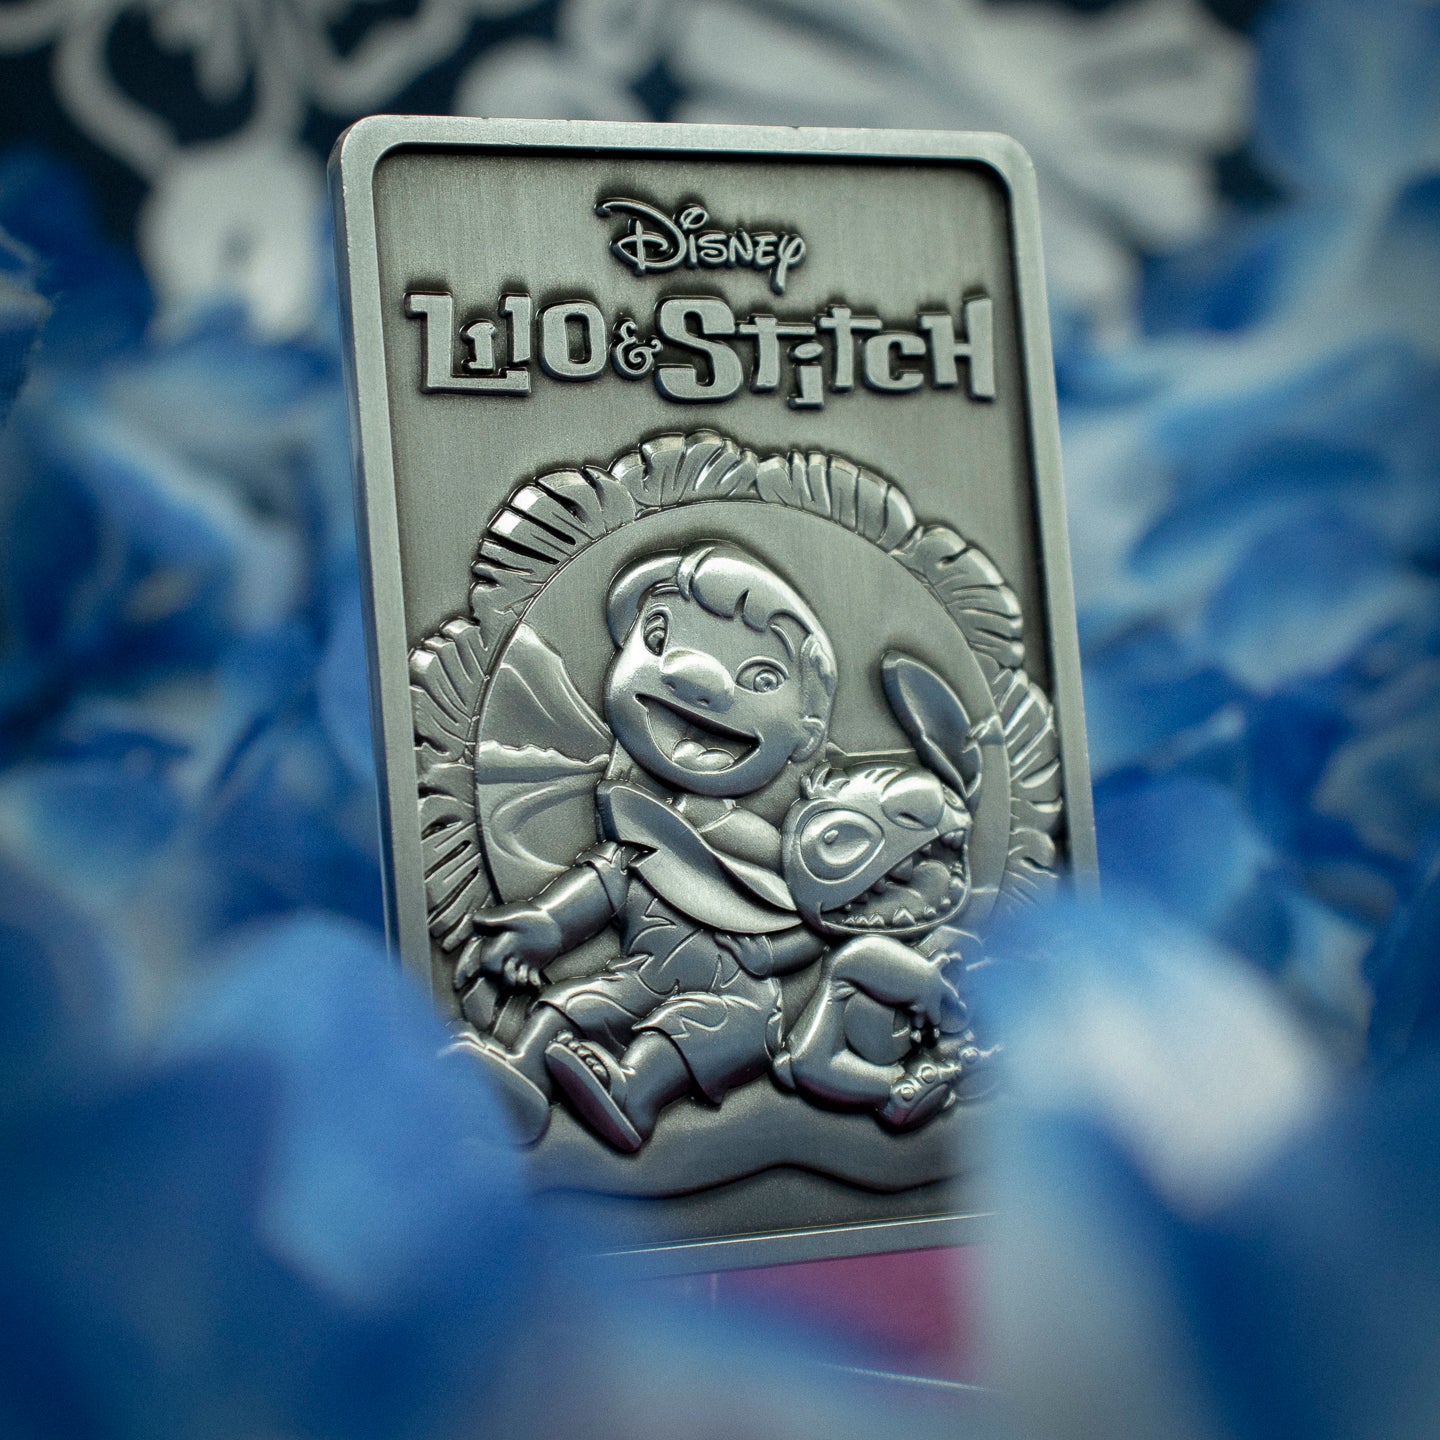 Disney Lilo & Stitch limited edition collectible ingot from Fanattik